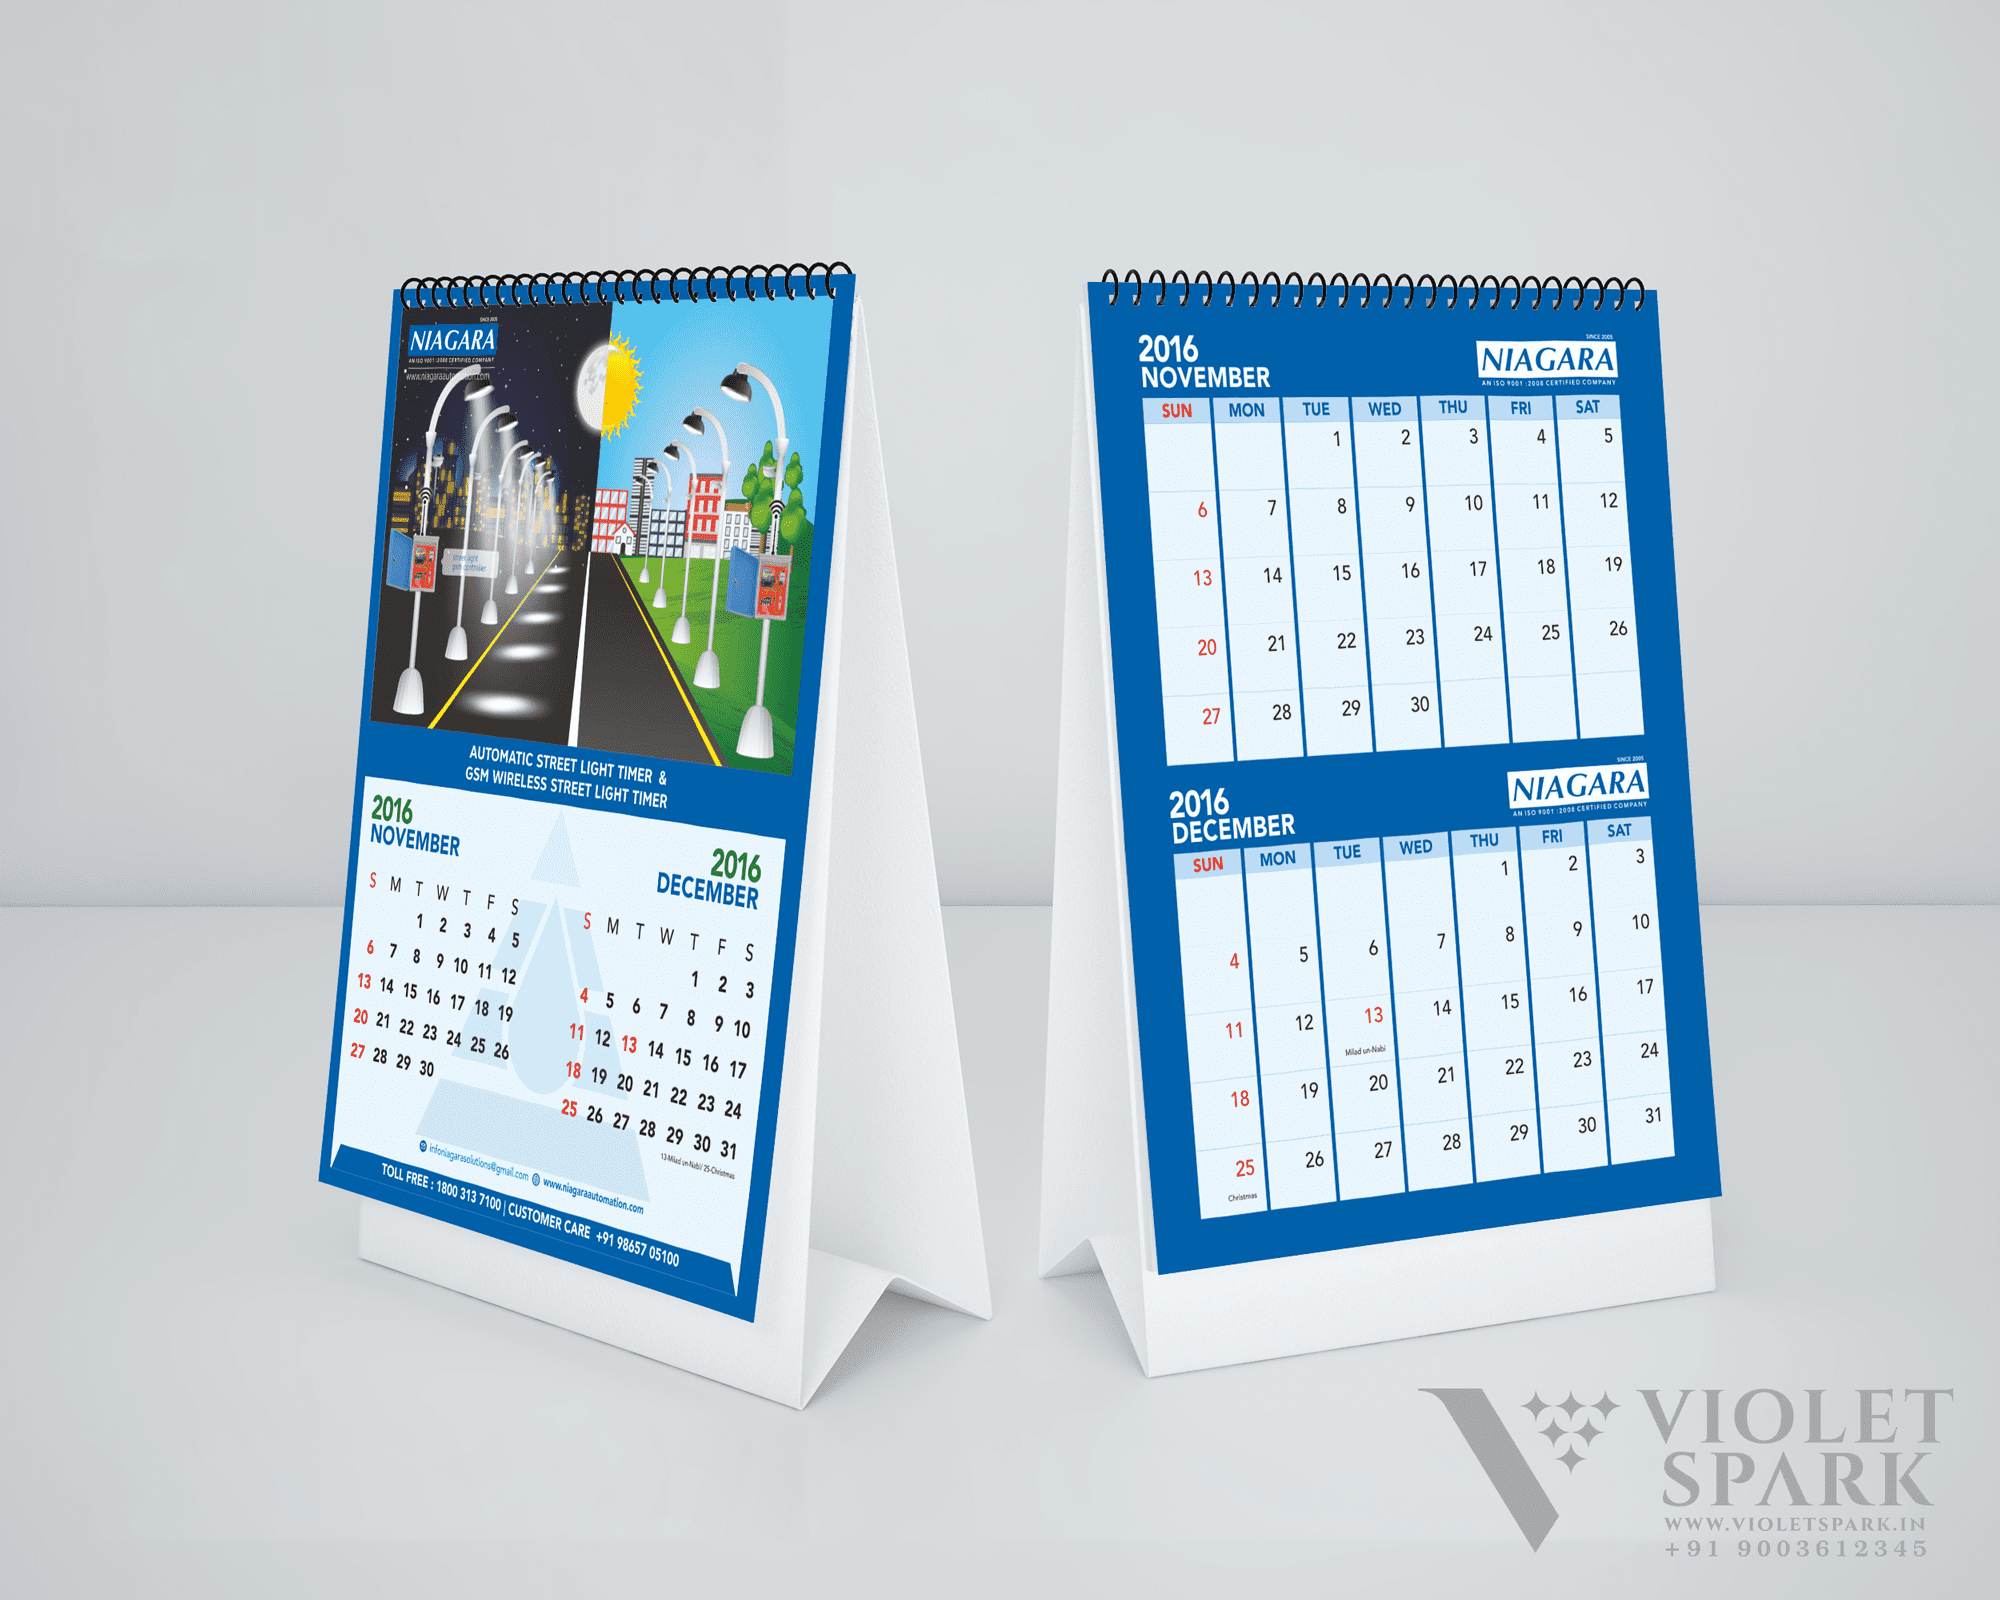 Niagara Solutions Calendar Graphic Design, Branding Packaging Design in Erode by Creative Prints thecreativeprints